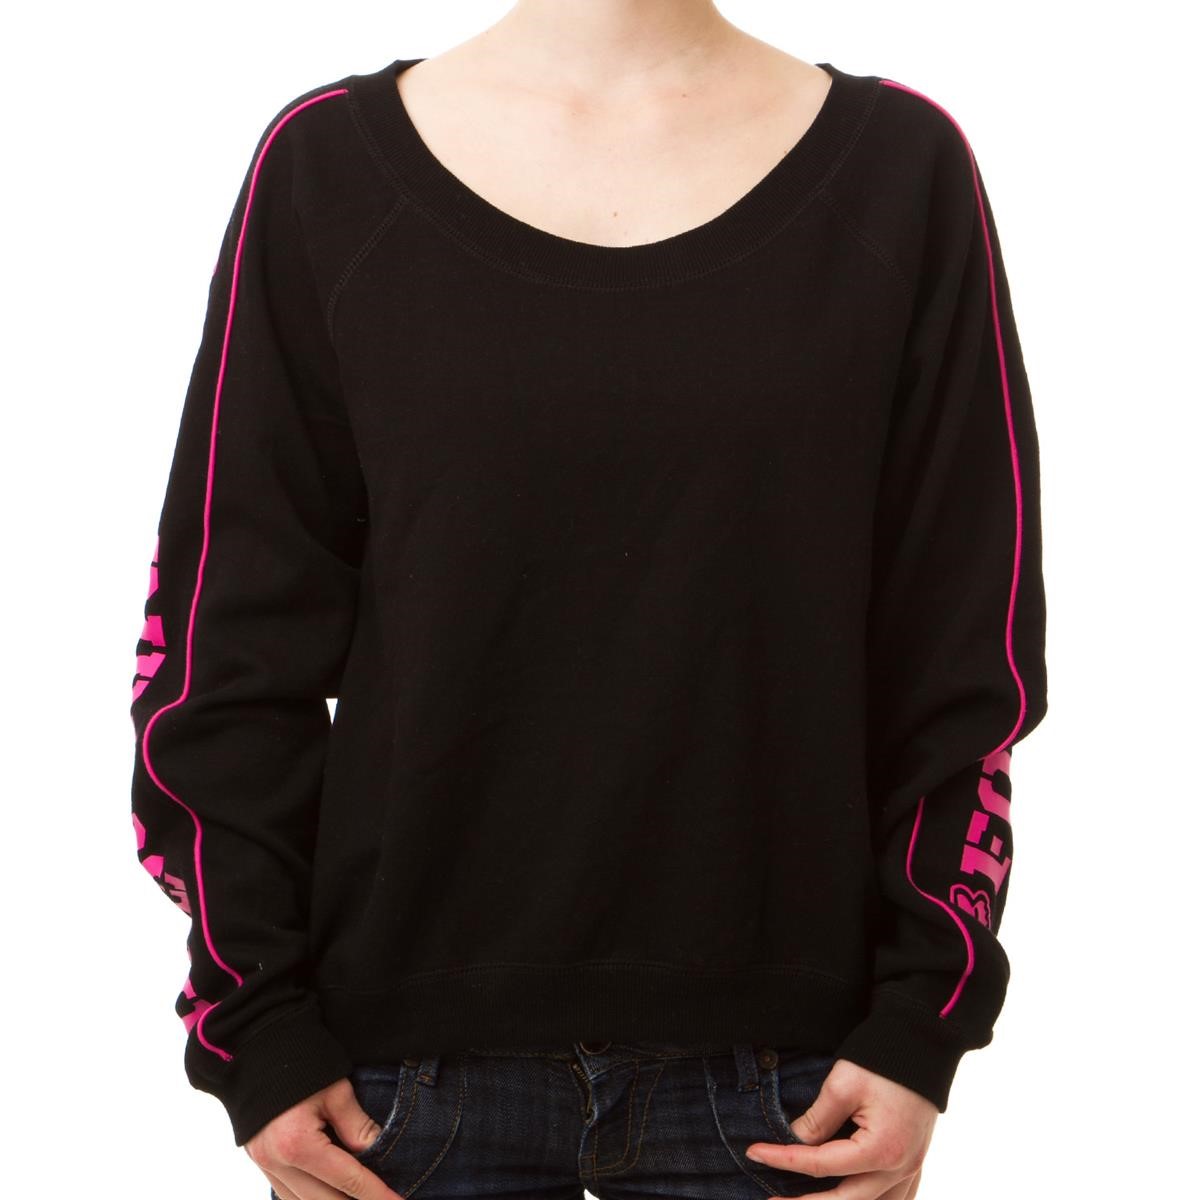 Freizeit/Streetwear Bekleidung-Pullover/Longsleeves - Fox Girls Pullover Extraordinaire Black